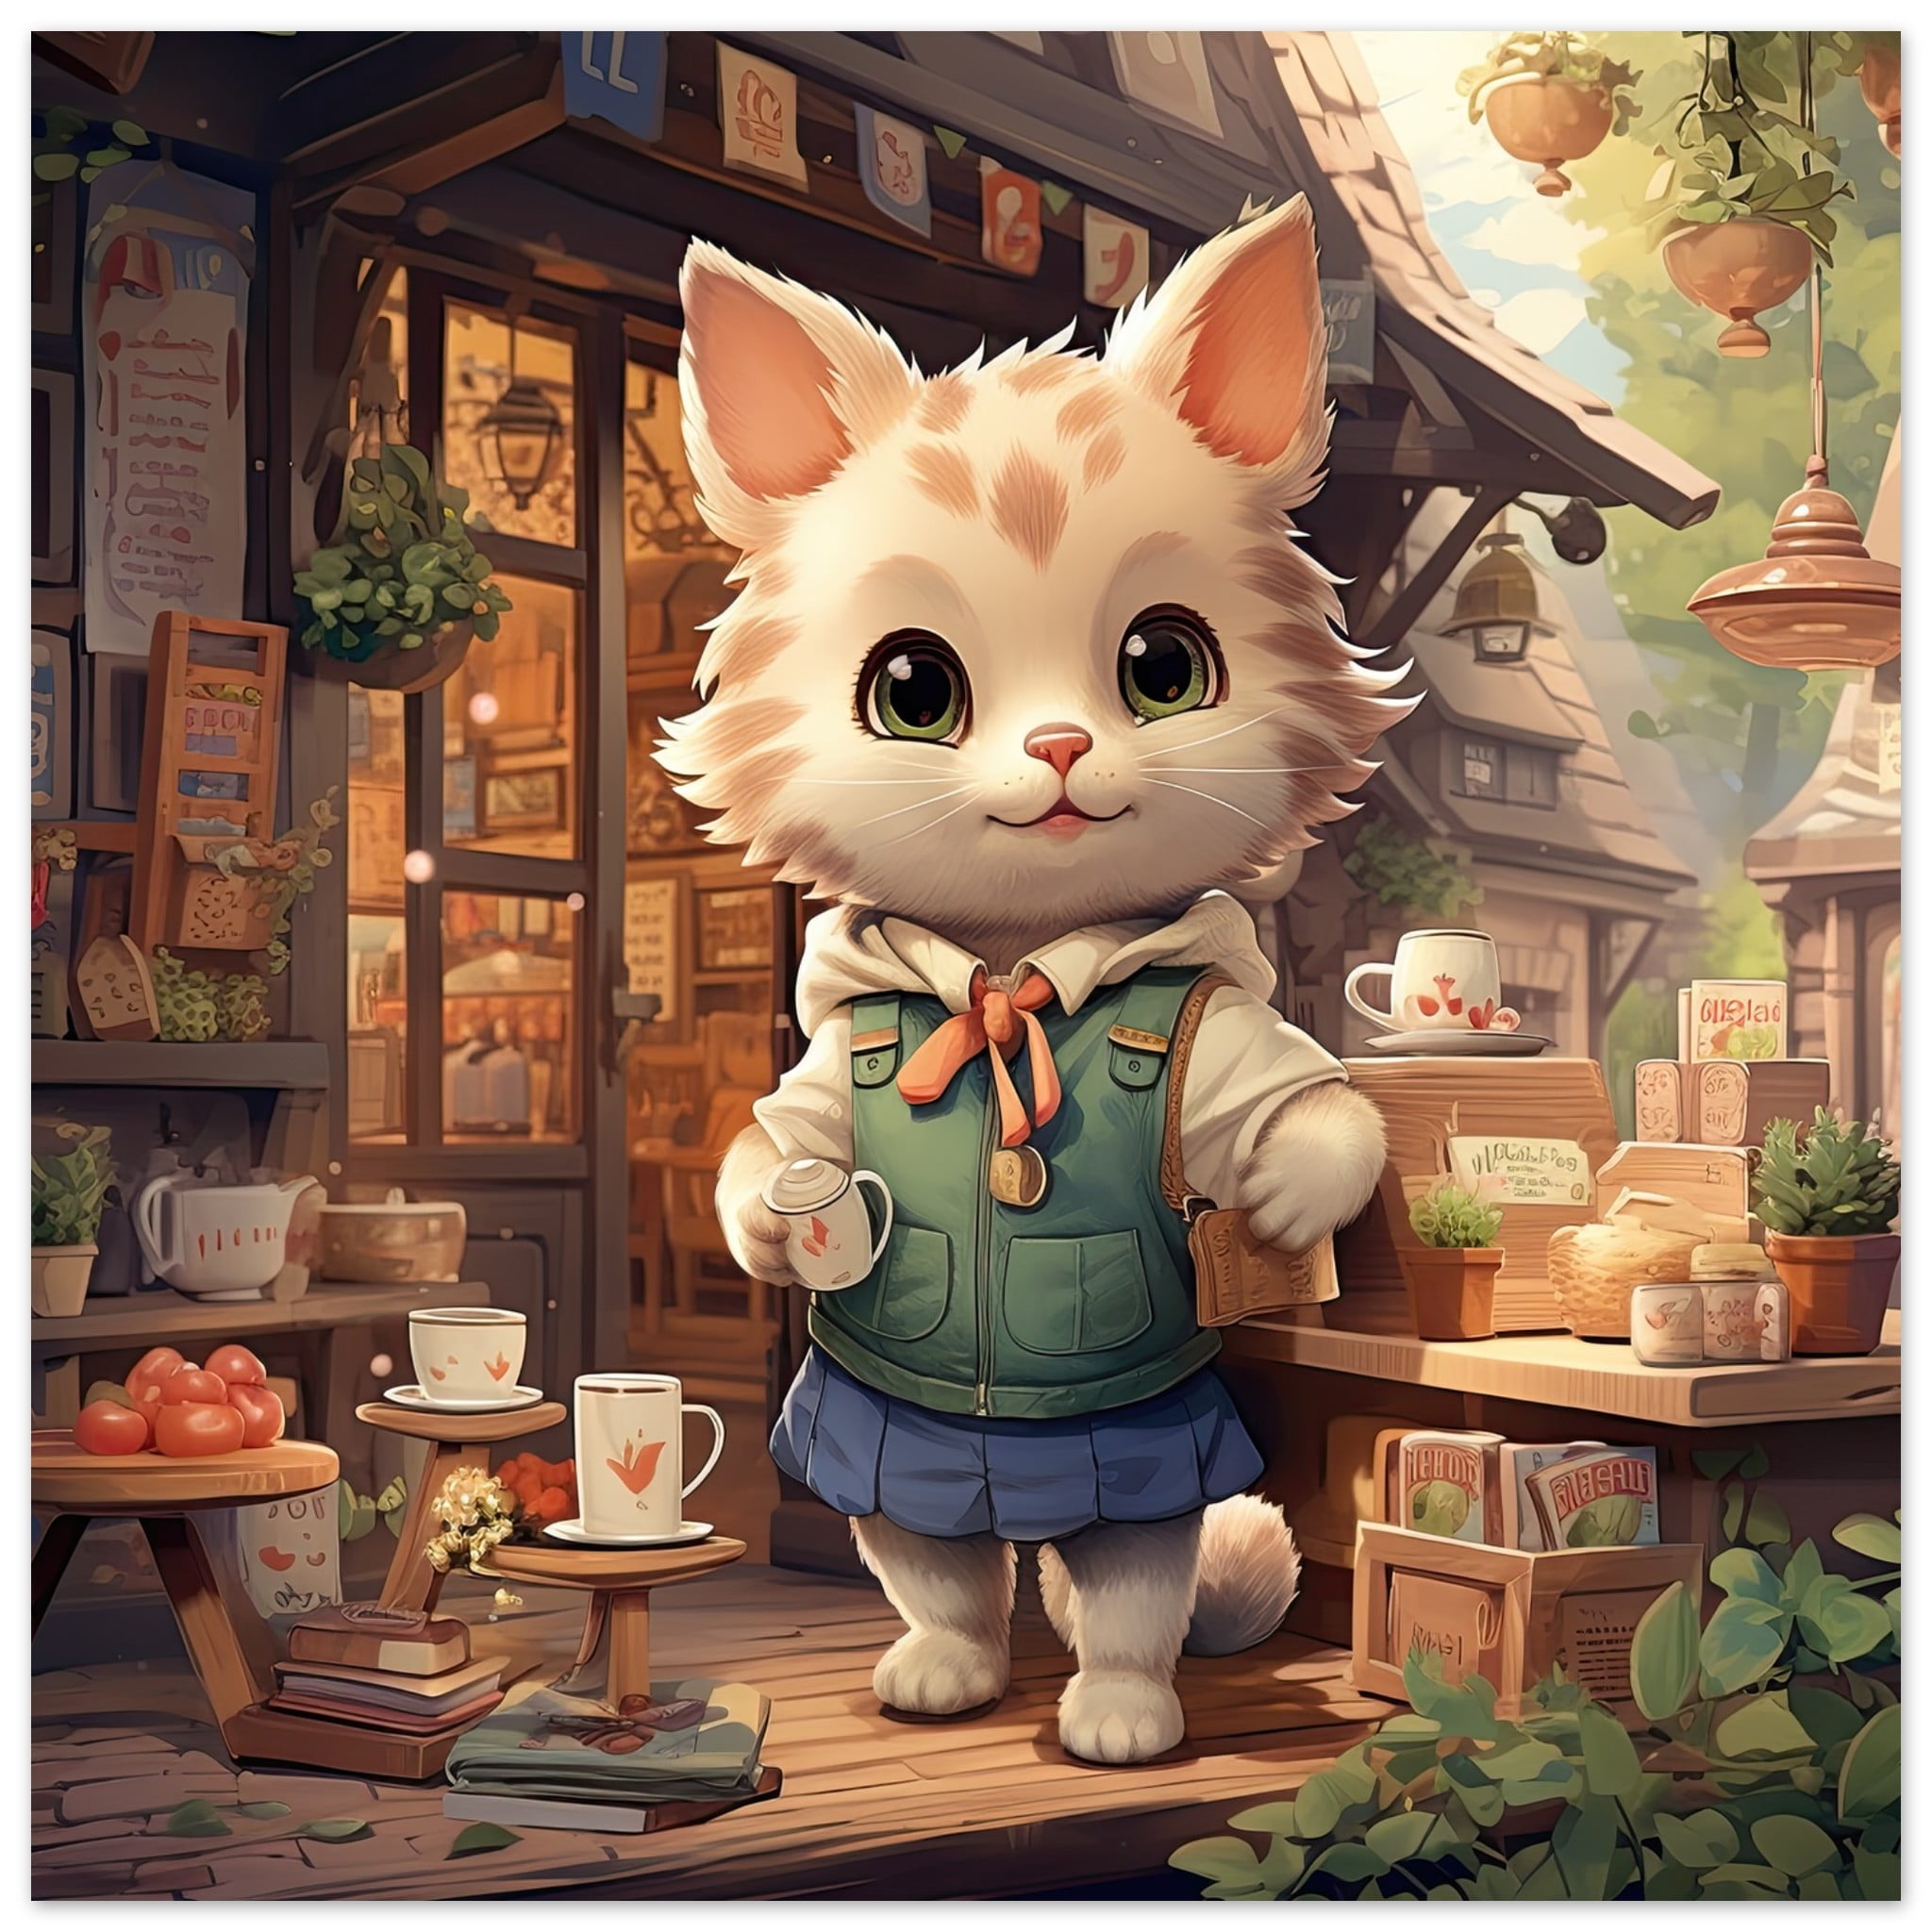 Cute Kitten Coffee Shop Art Poster